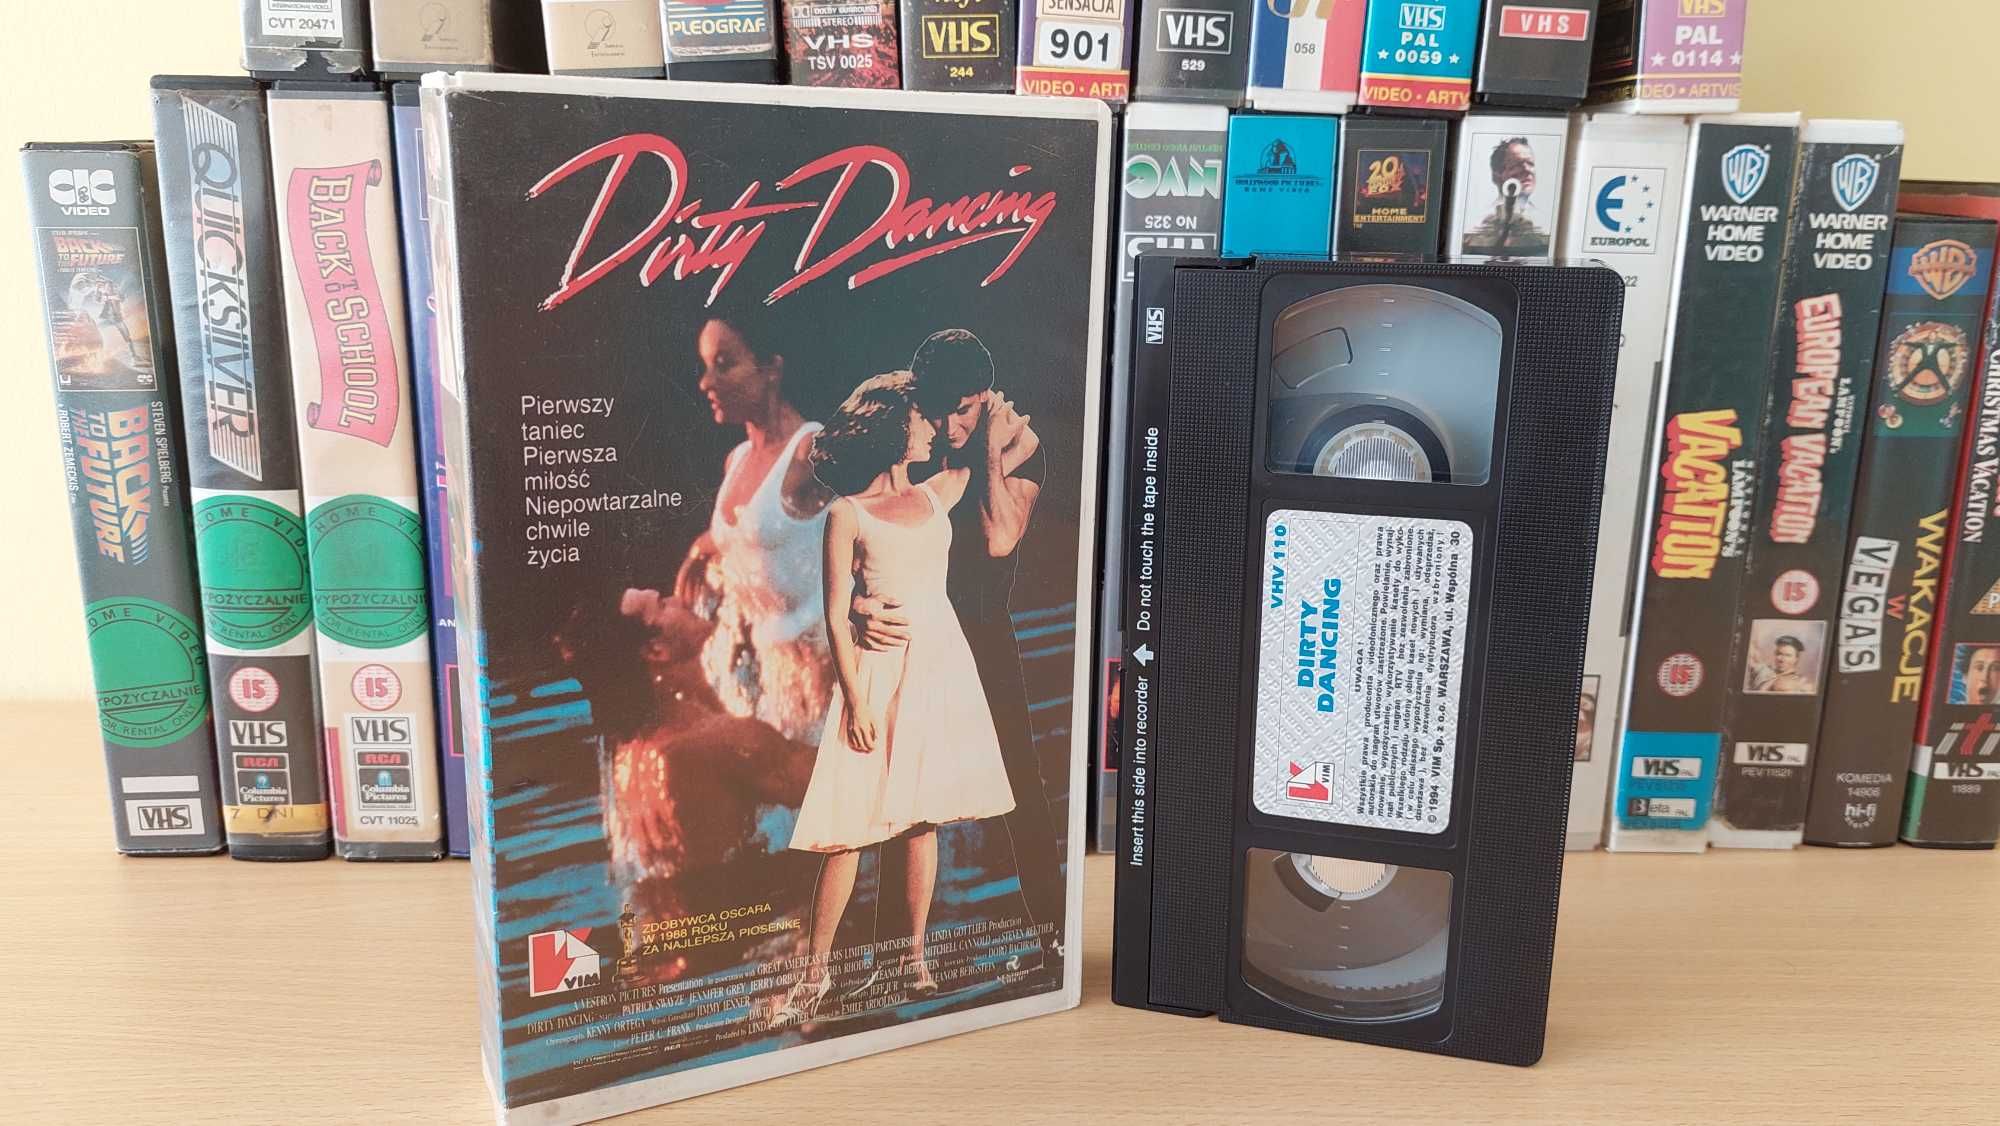 Dirty Dancing - VHS